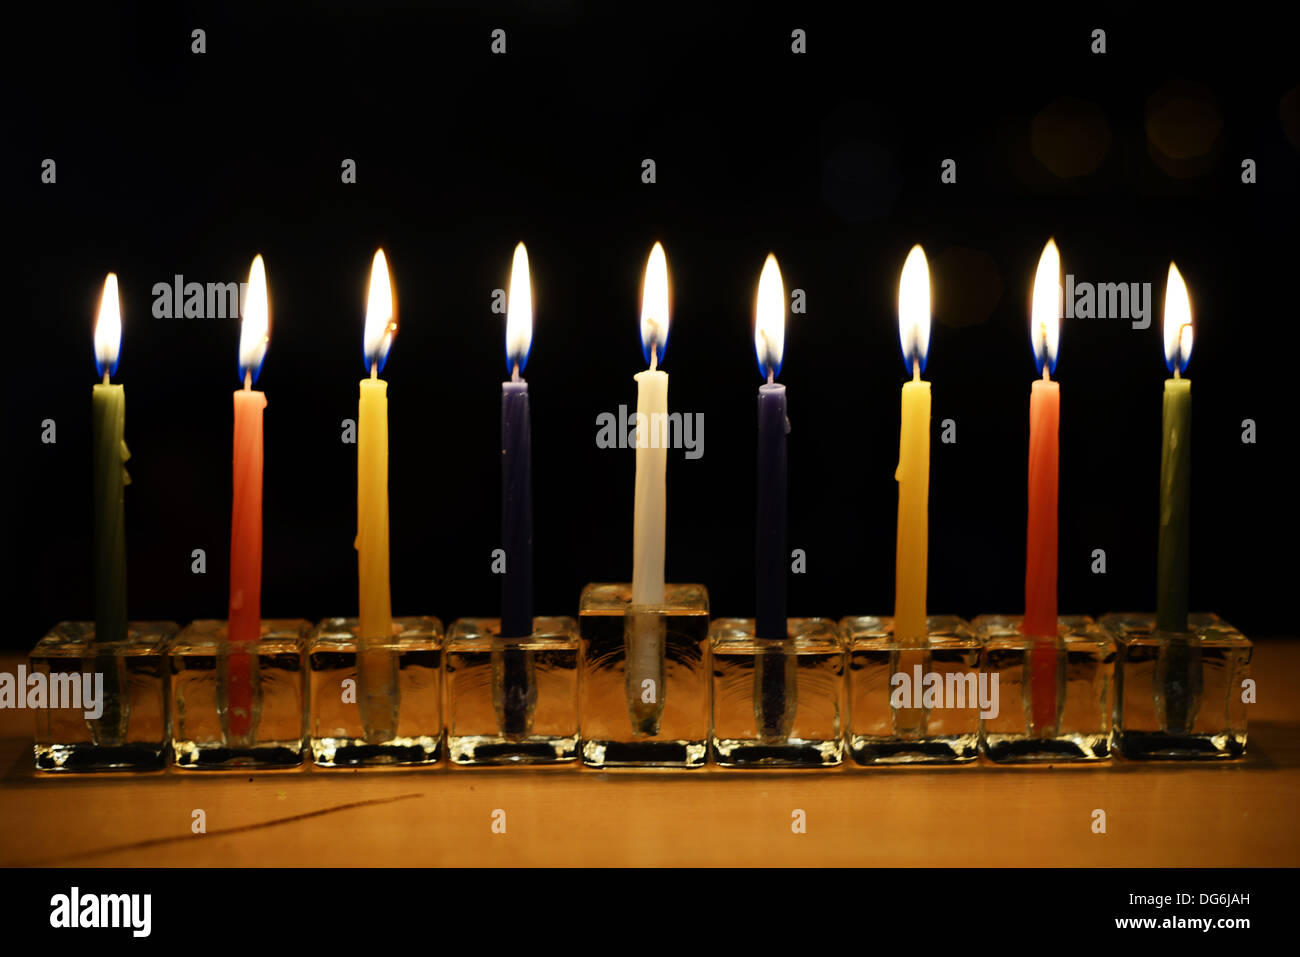 Menorah candles in the Dark Stock Photo